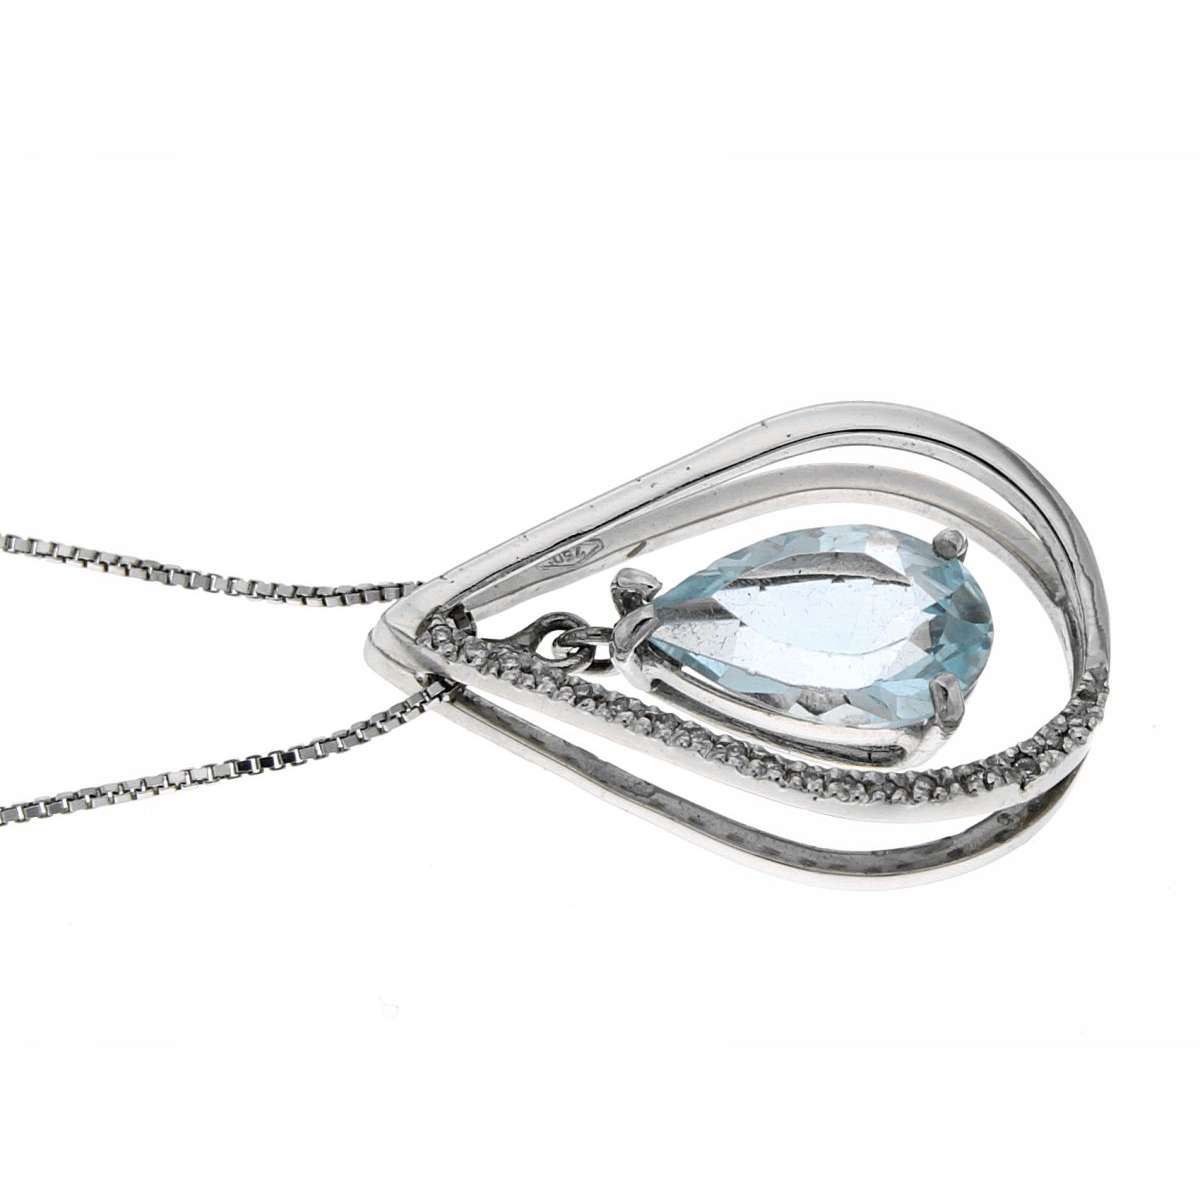 Necklace aquamarine 3.00 cts 0.09 carats diamonds G-VS1